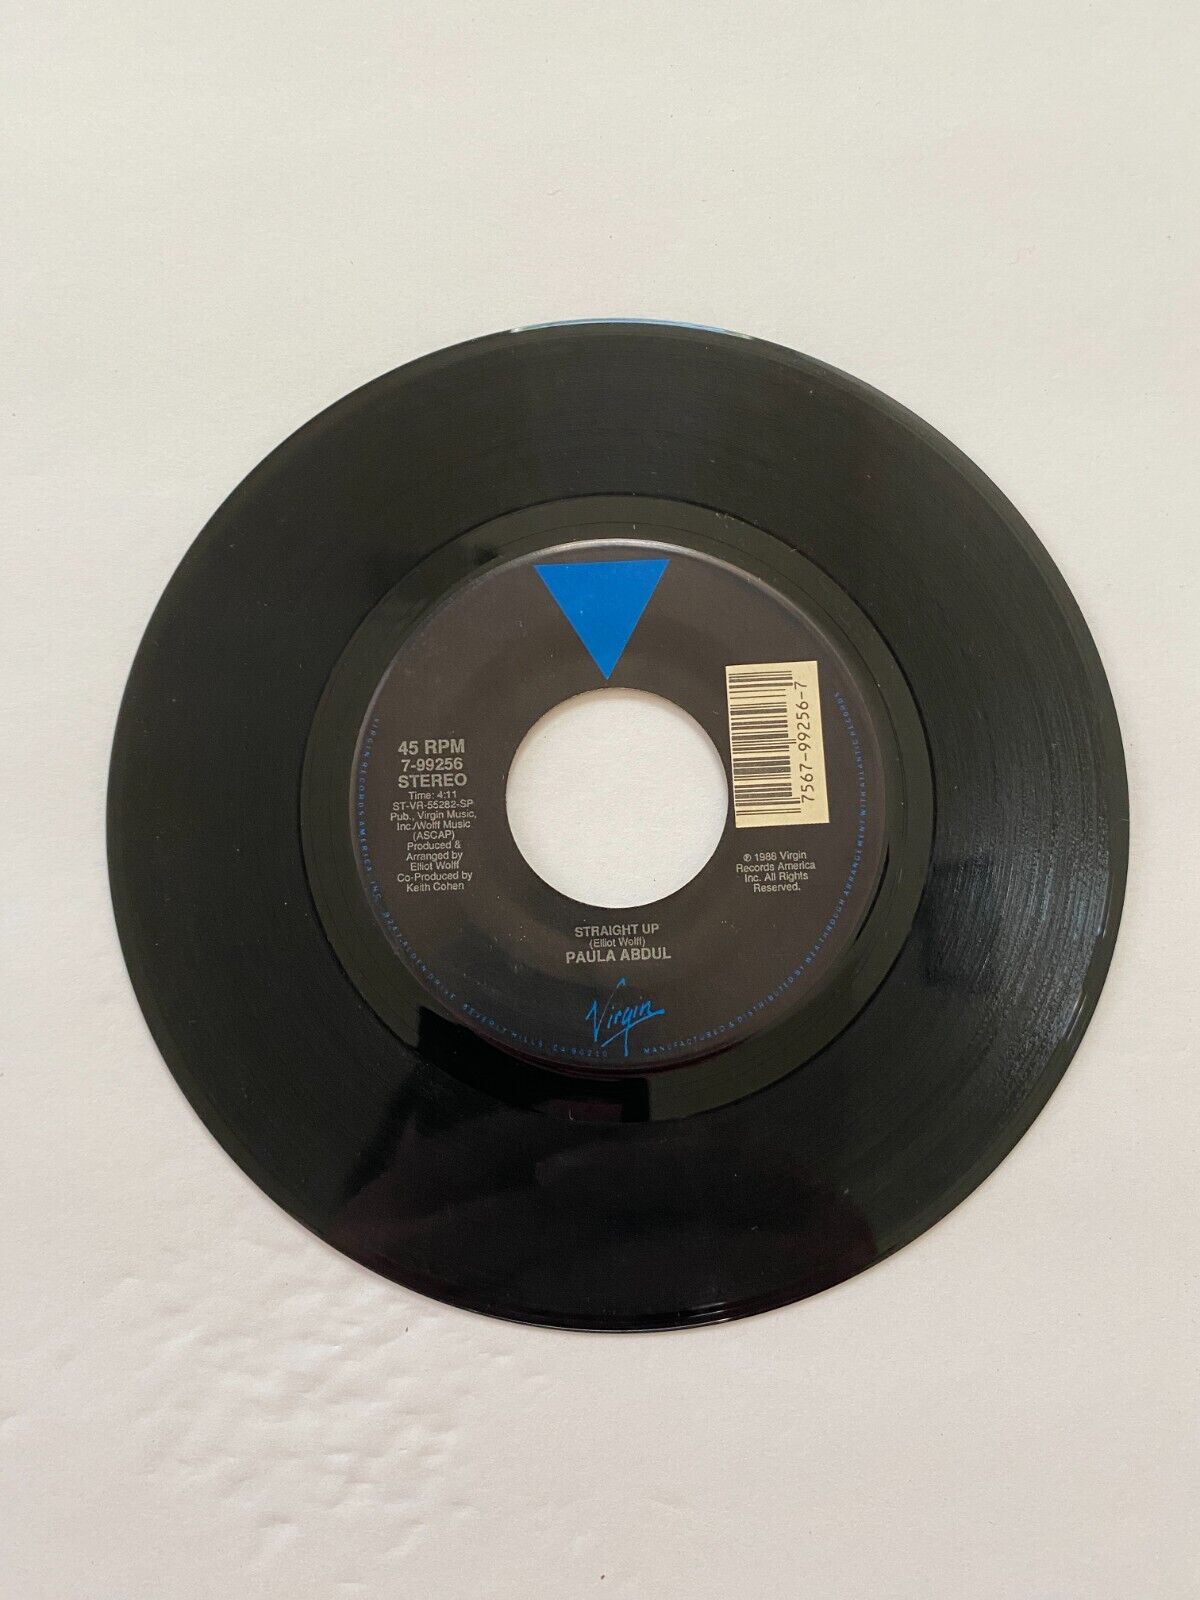 Paula Abdul – "Straight Up" Vinyl, 7", 45 RPM, Single Dance-Pop 1988